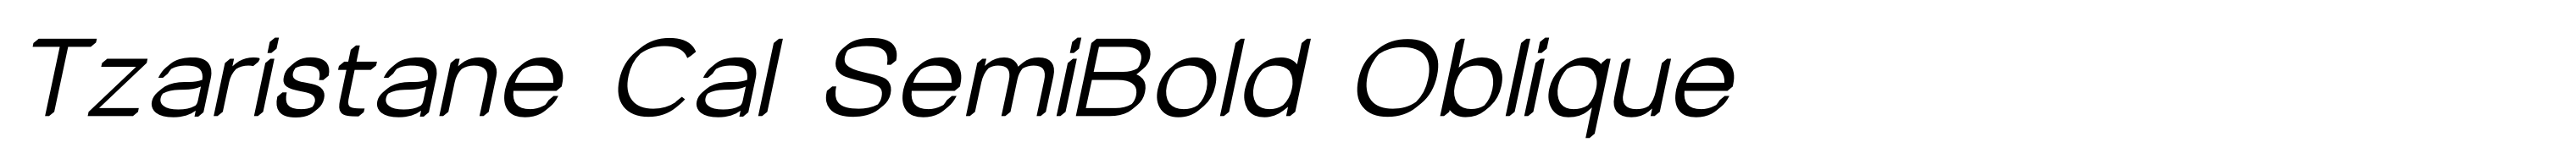 Tzaristane Cal SemiBold Oblique